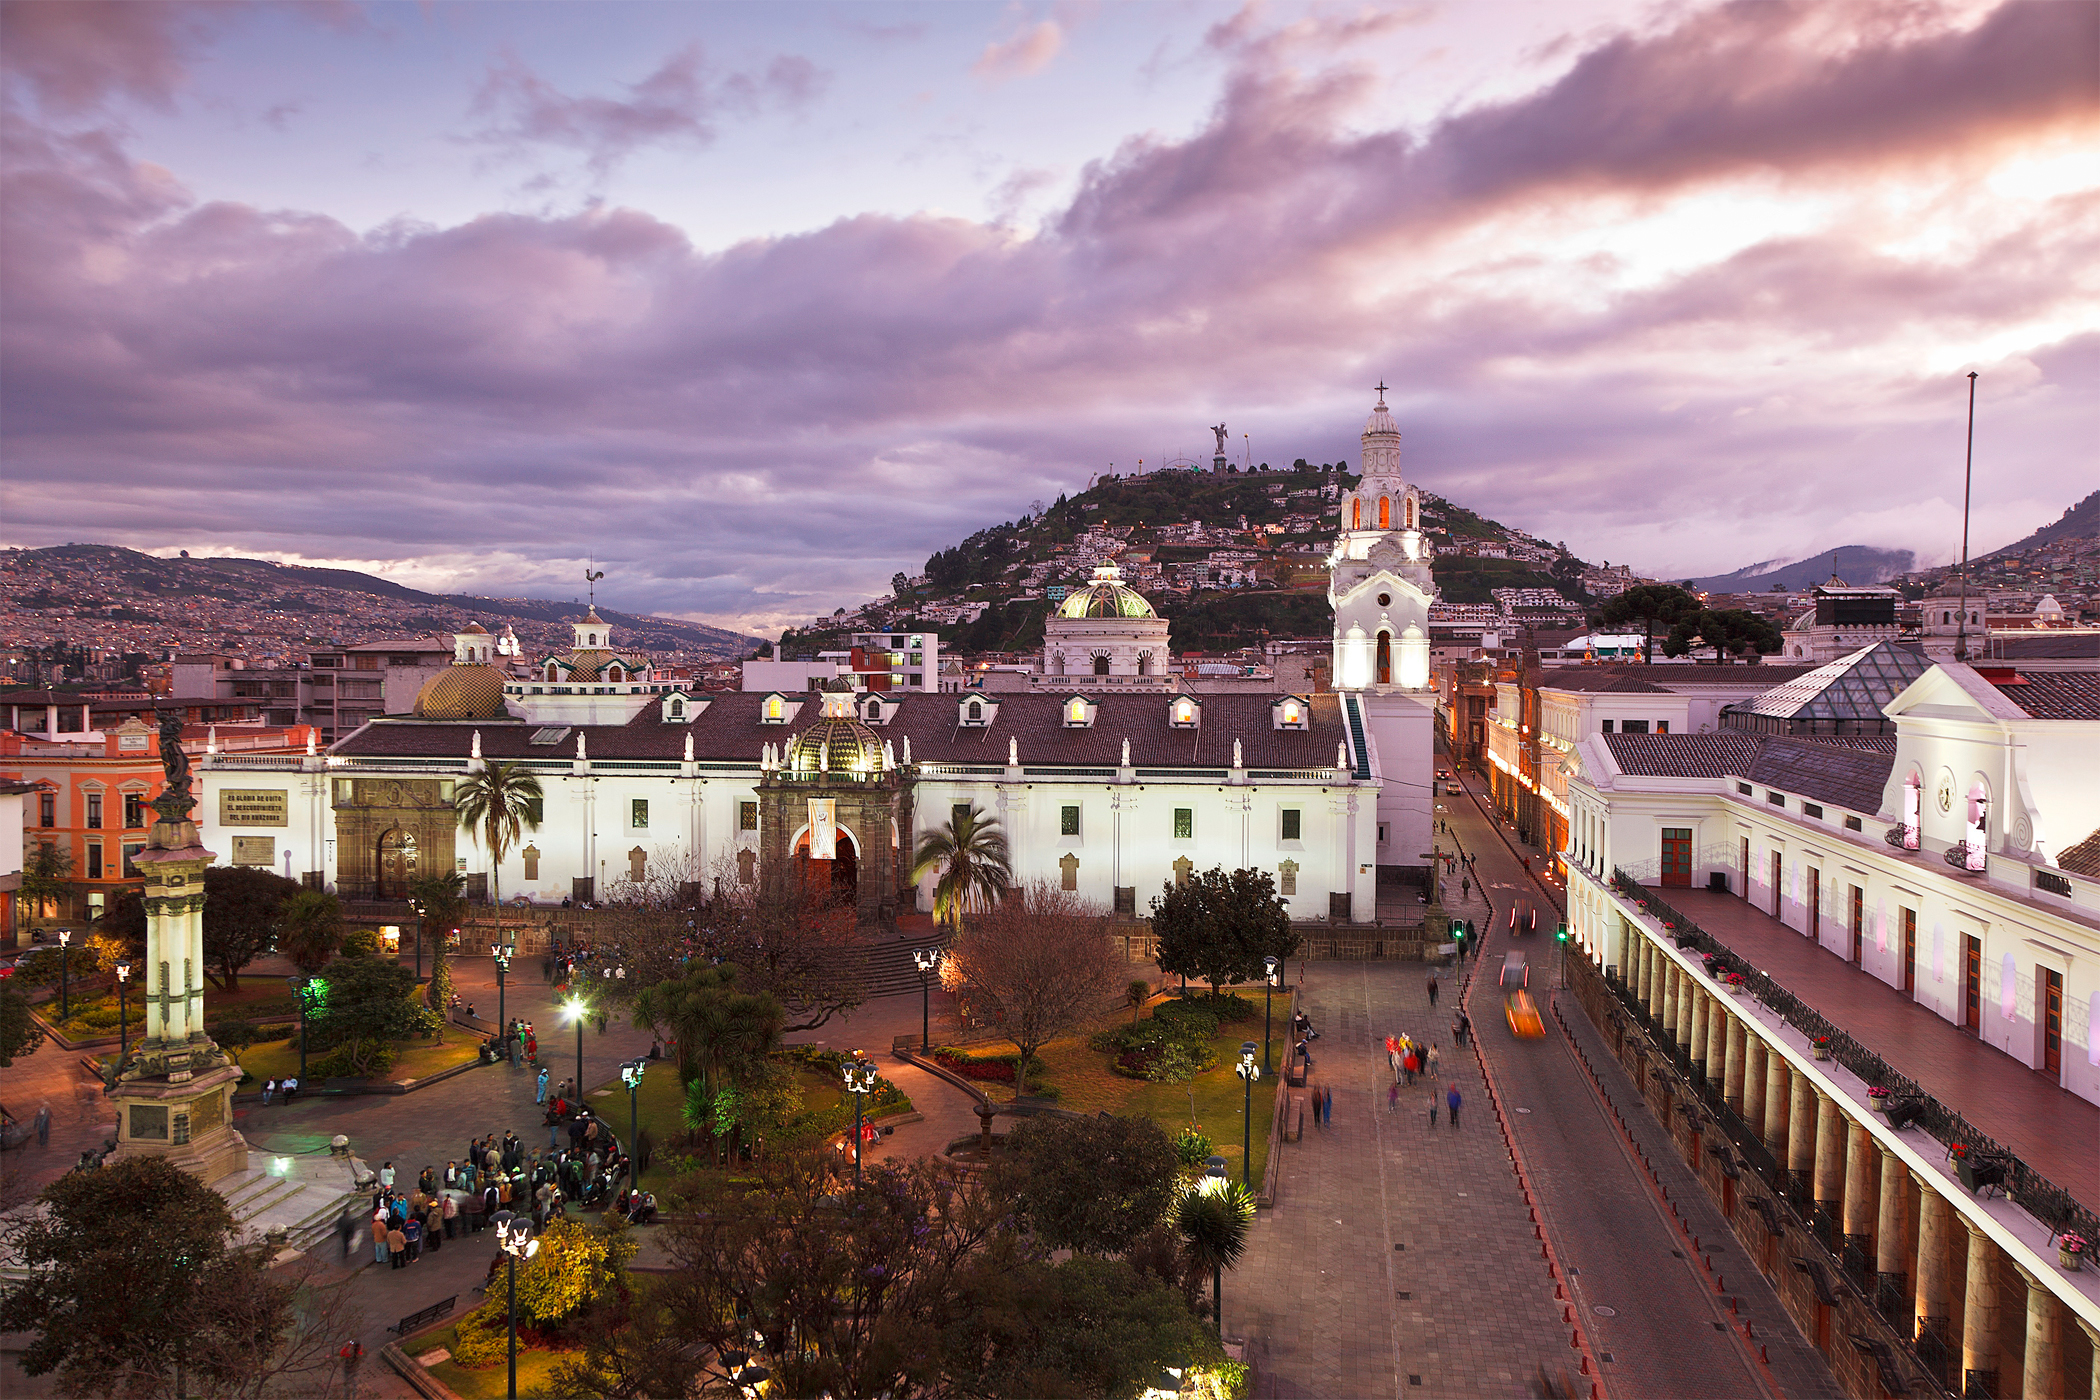 The Plaza de la Independencia sits at the center of capital city Quito, Ecuador.